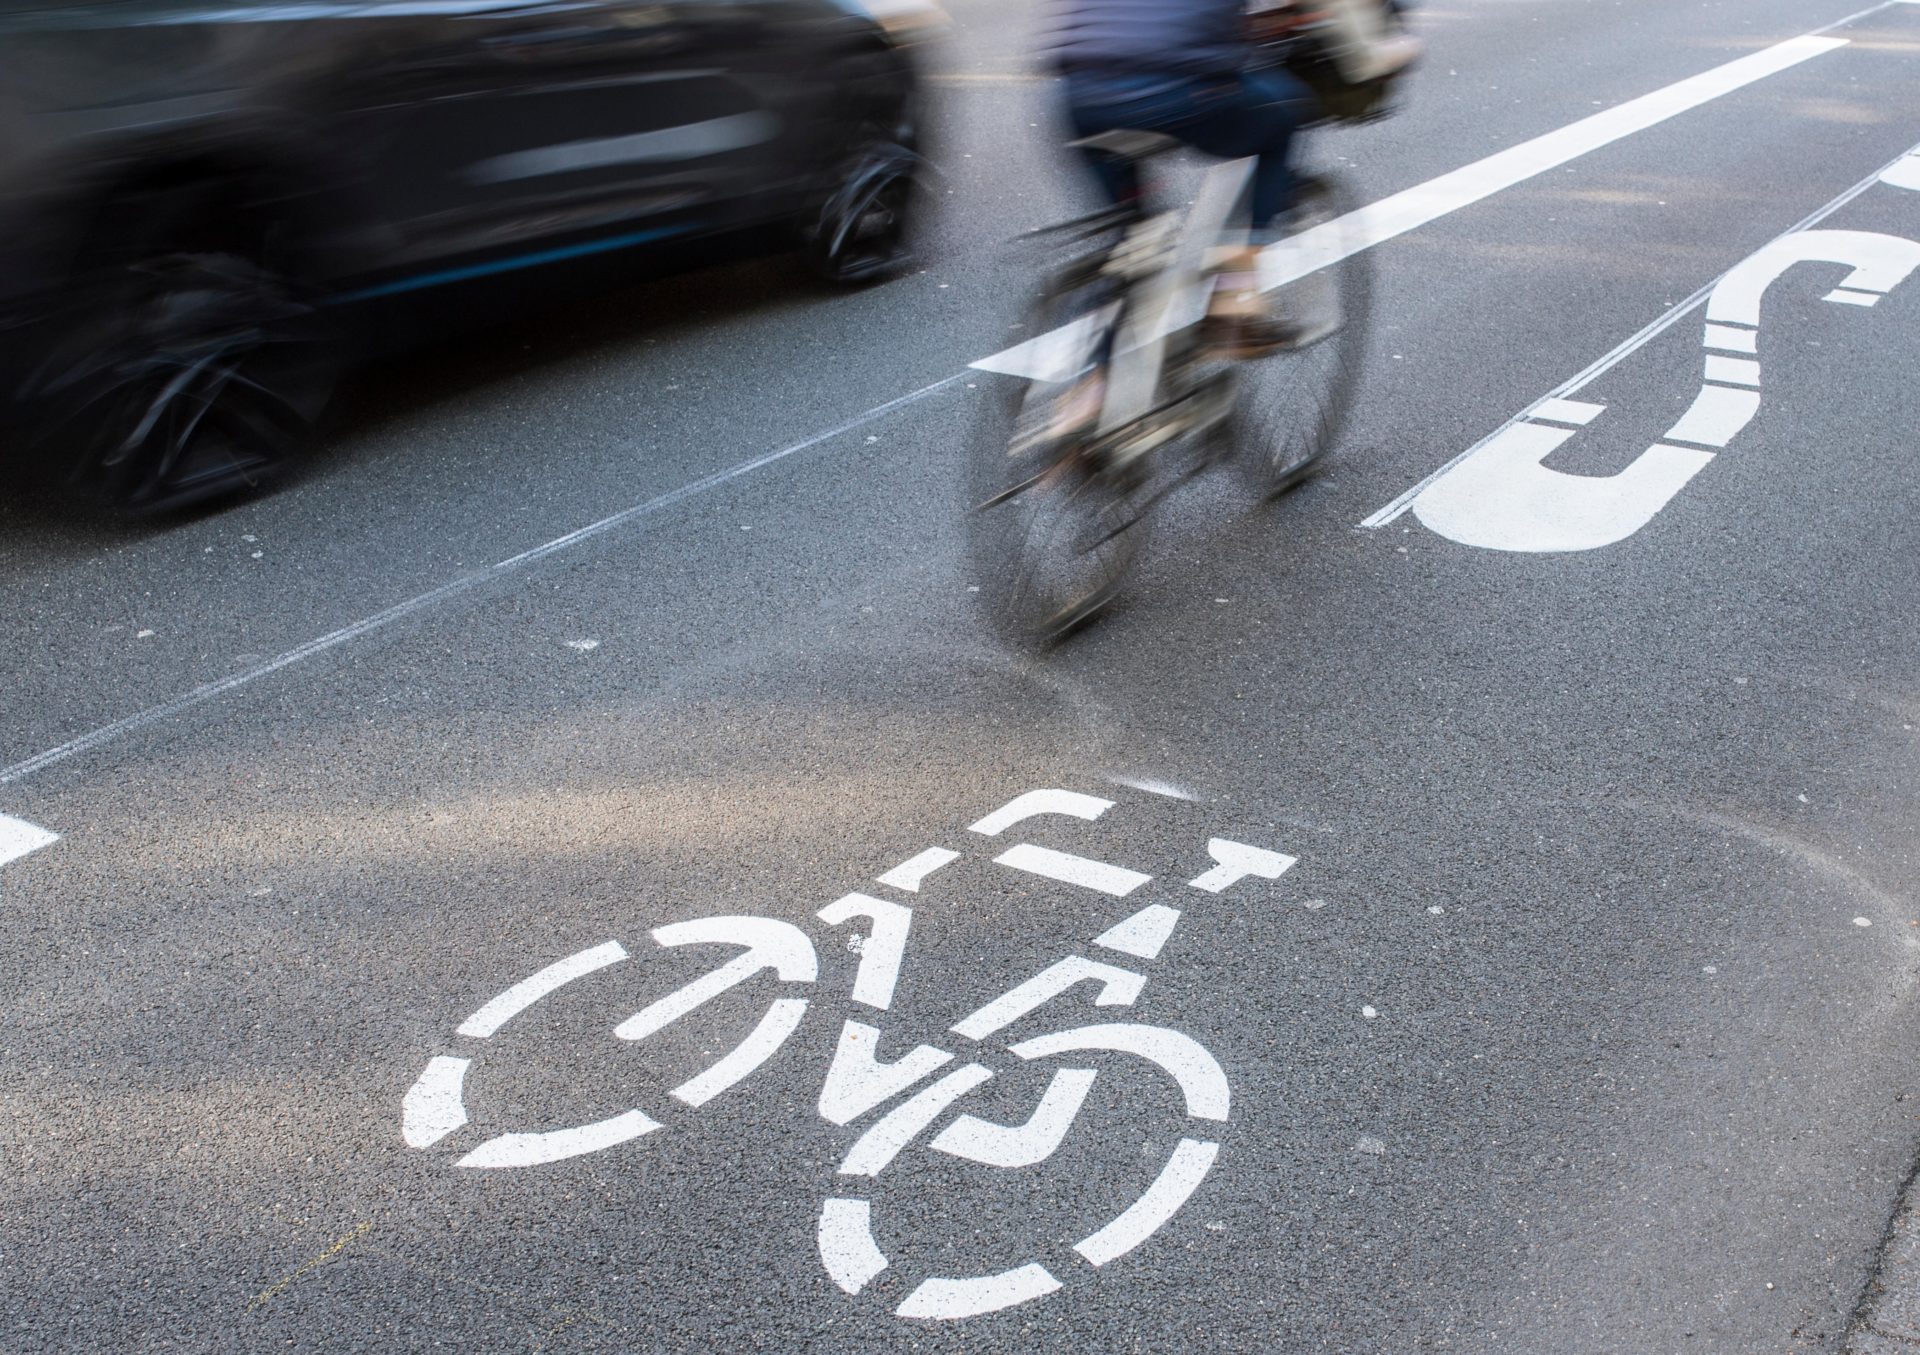 A person cycling in a bike lane, 16-4-19.